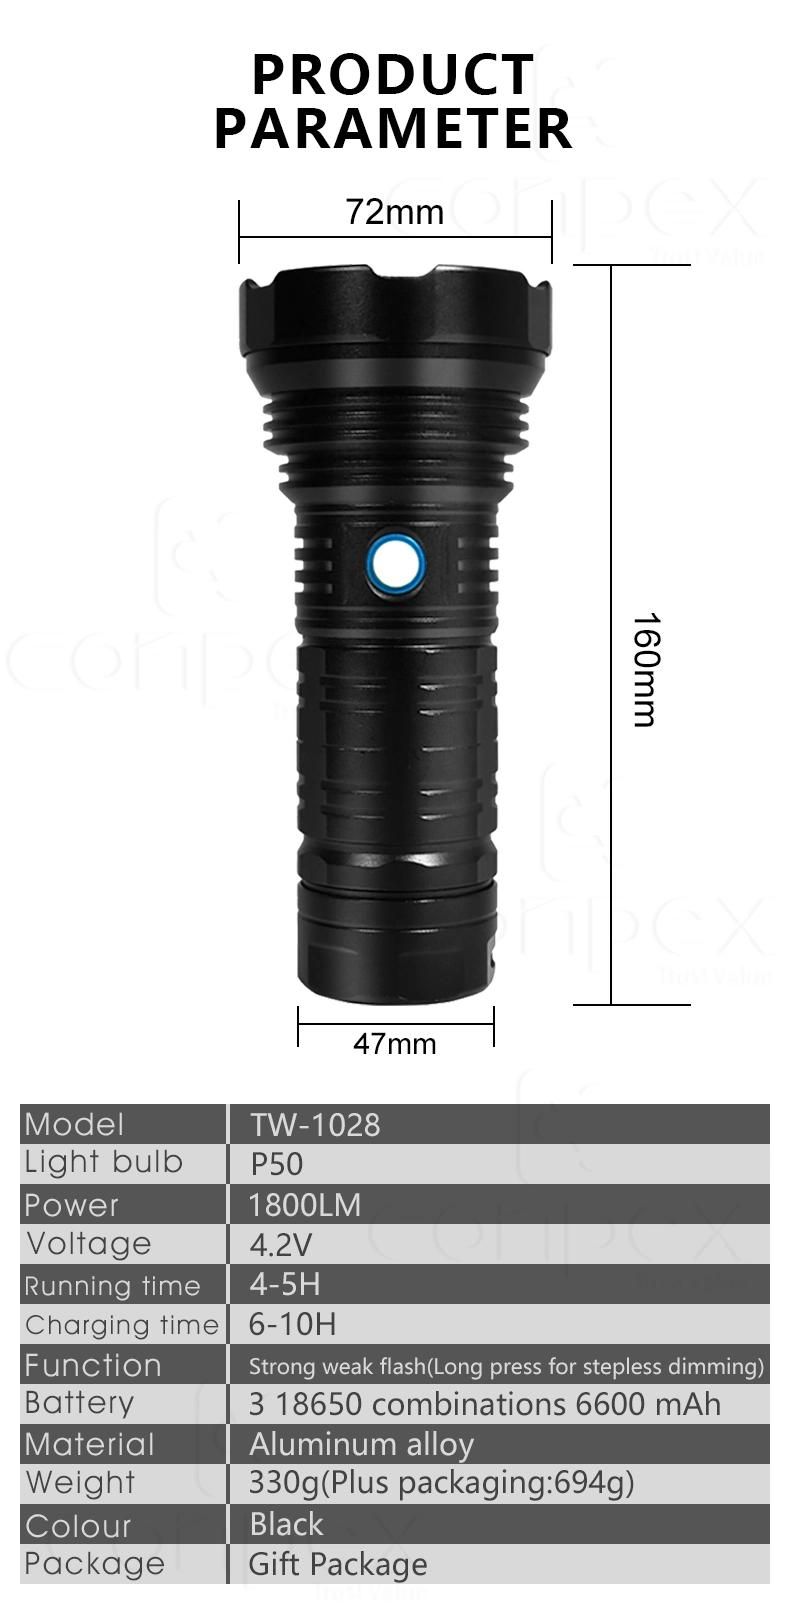 360 Light Portable Outdoor Emergency Lighting Black USB LED Rechargeable Flashlight